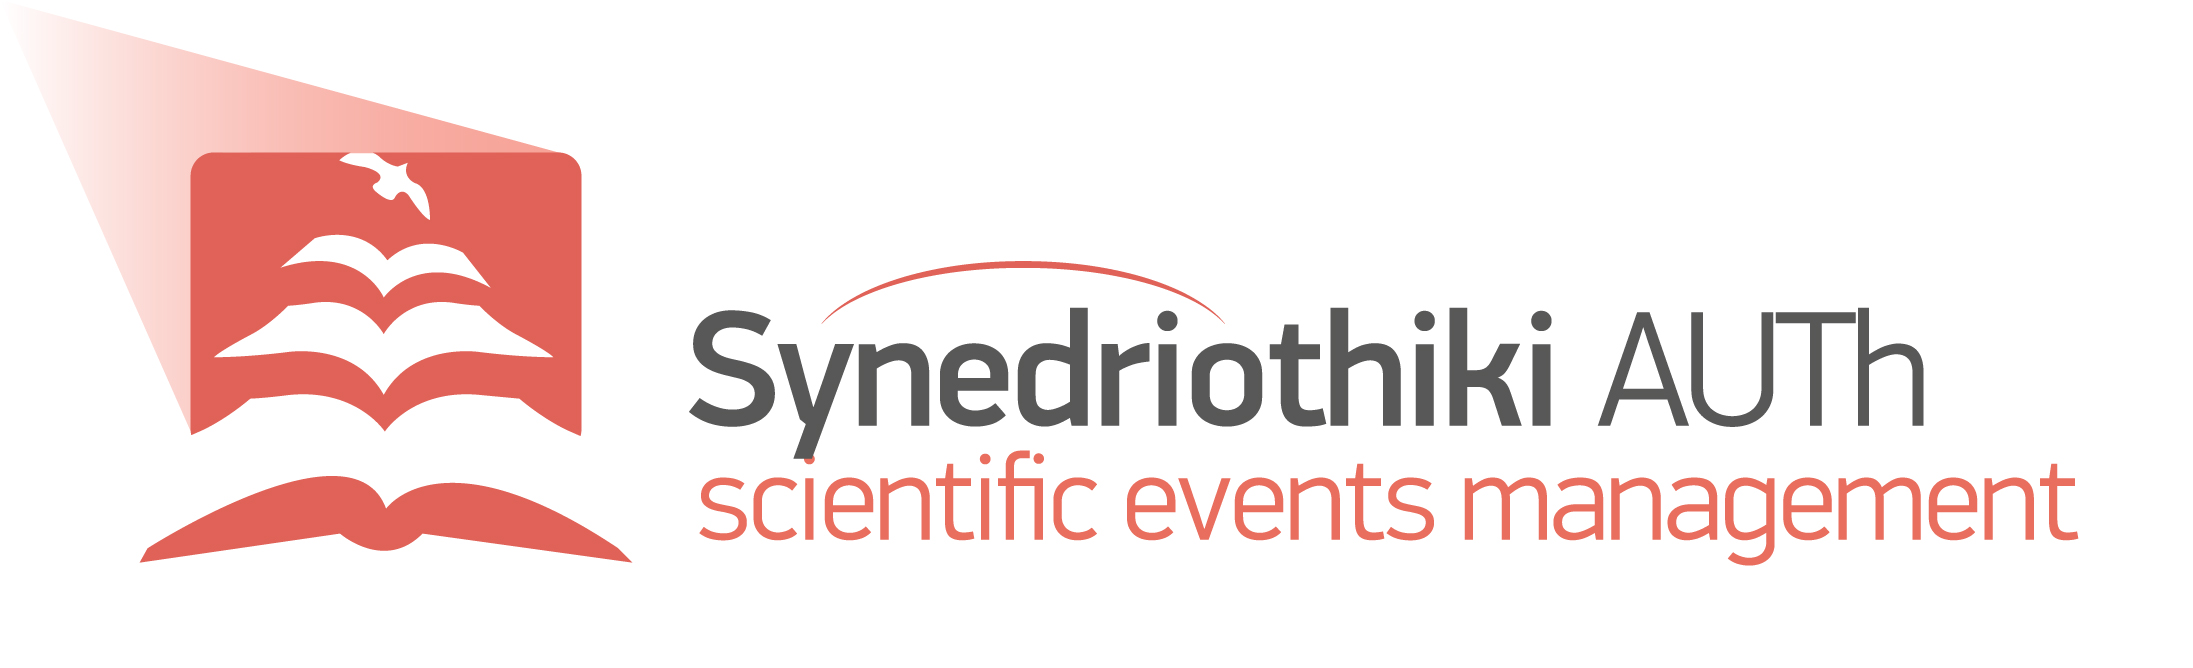 Synedriothiki logo. © AUTh Library.